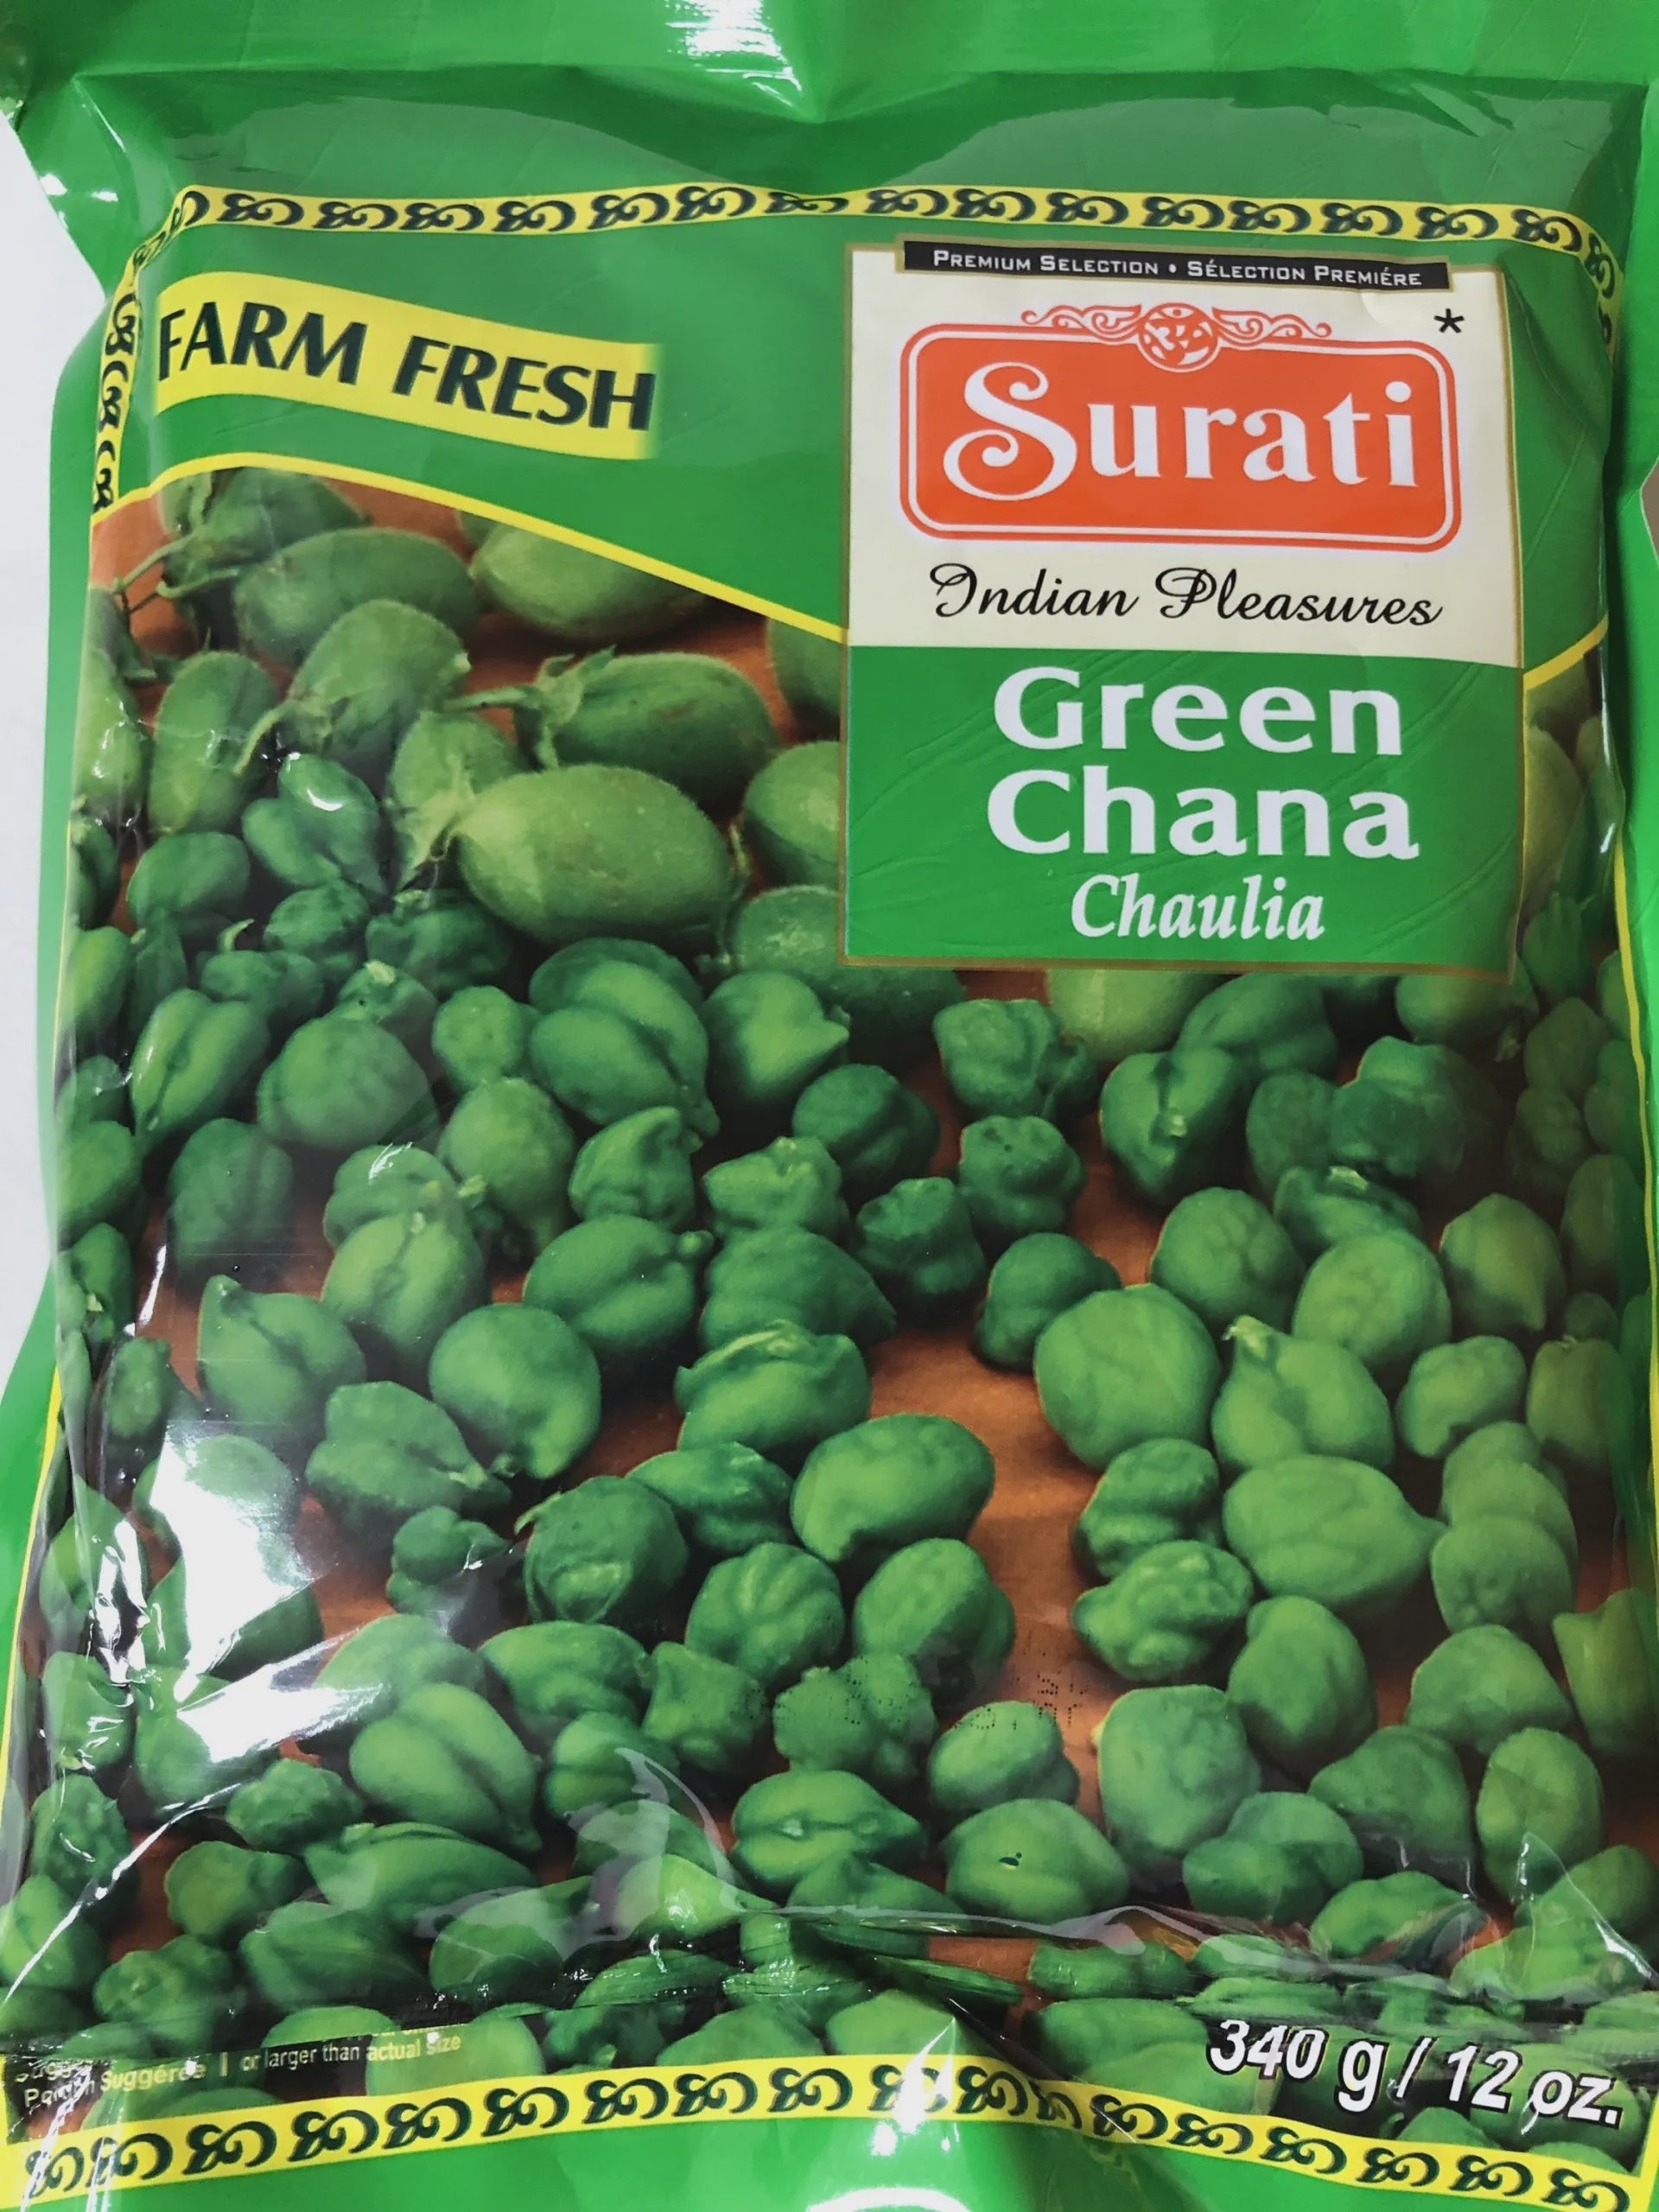 Surati Frozen - Green Chana/Chaulia 340g